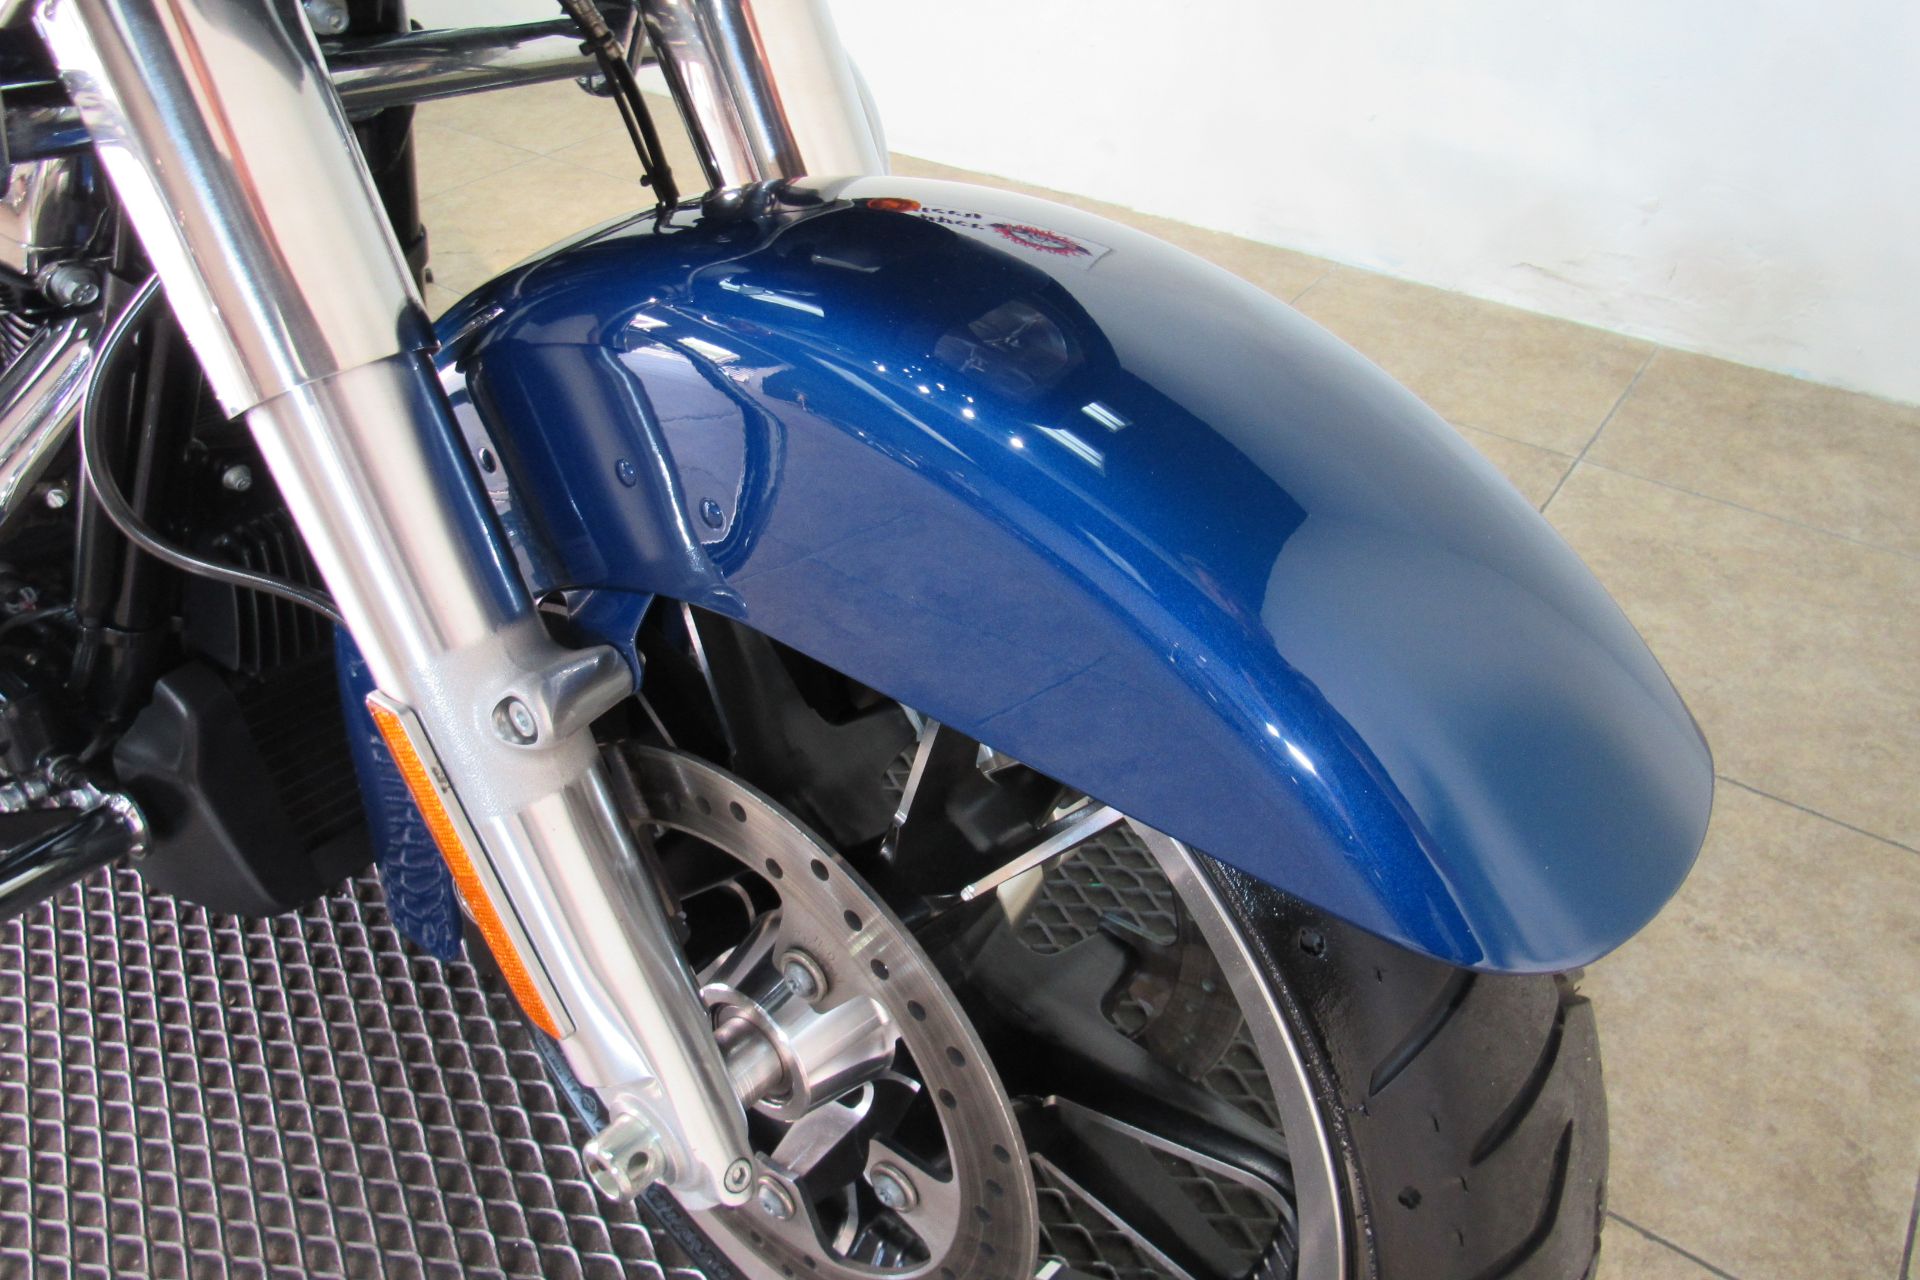 2022 Harley-Davidson Road Glide® in Temecula, California - Photo 16